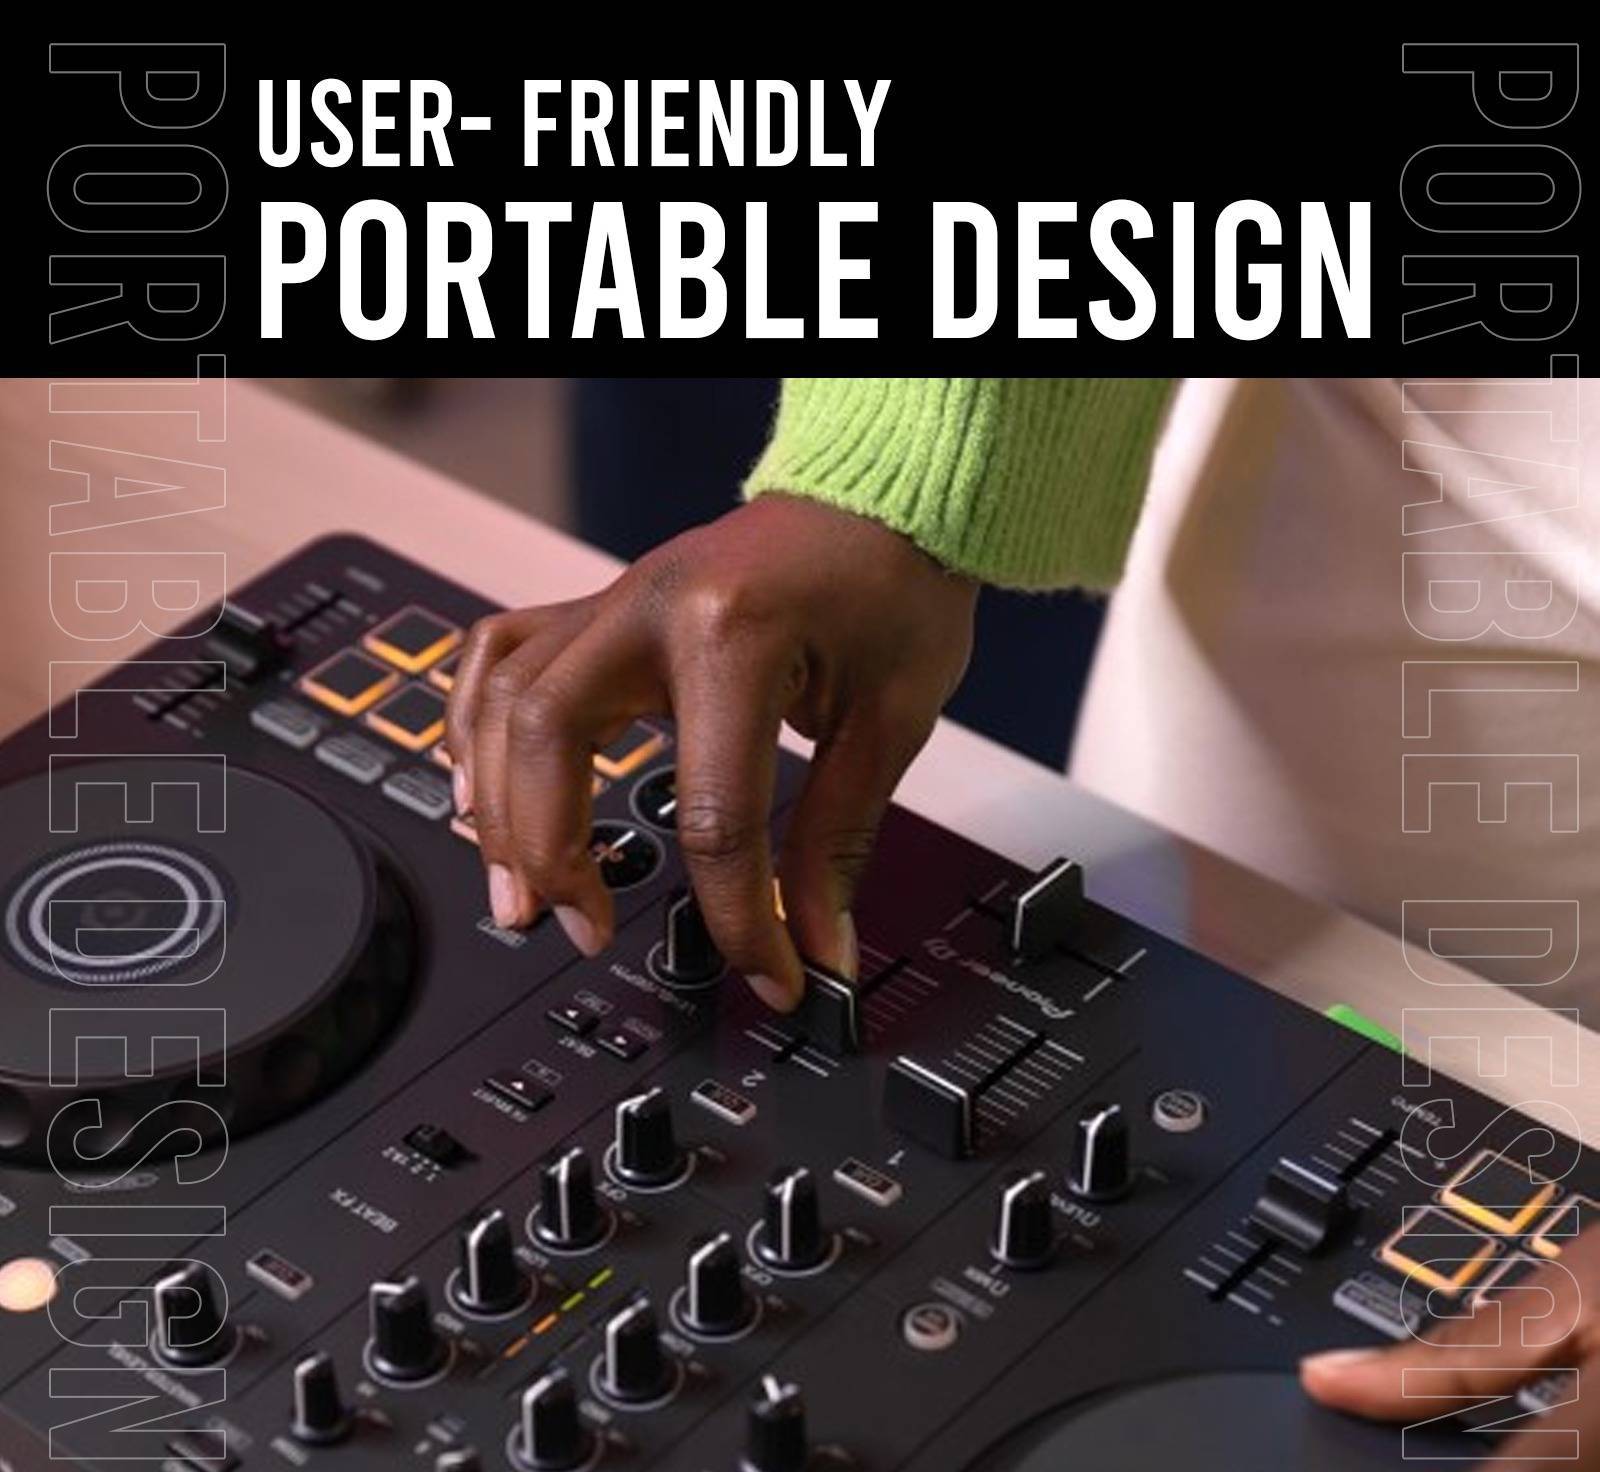 Introducing the Pioneer DJ DDJ-FLX4 DJ Controller